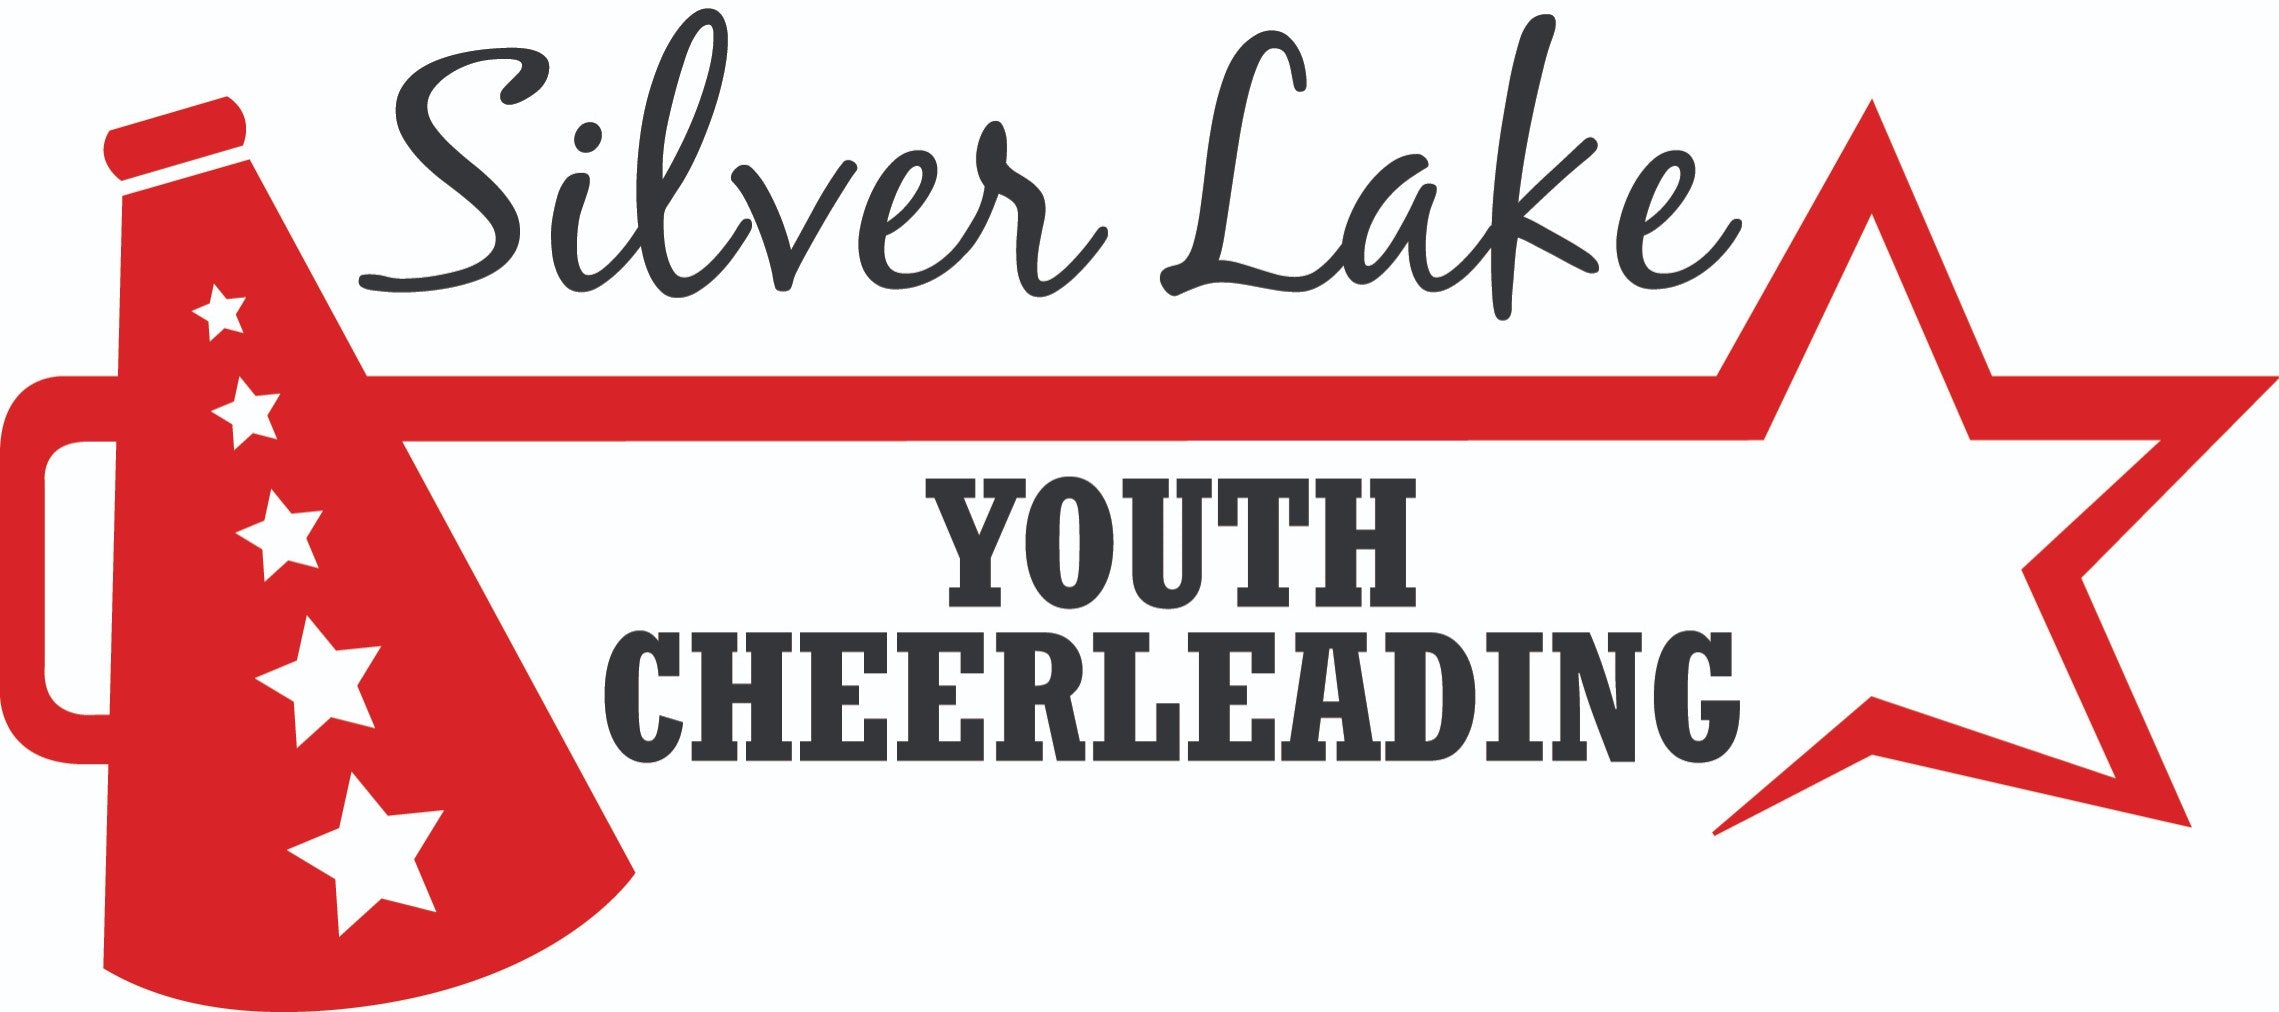 Silver Lake Youth Cheerleading